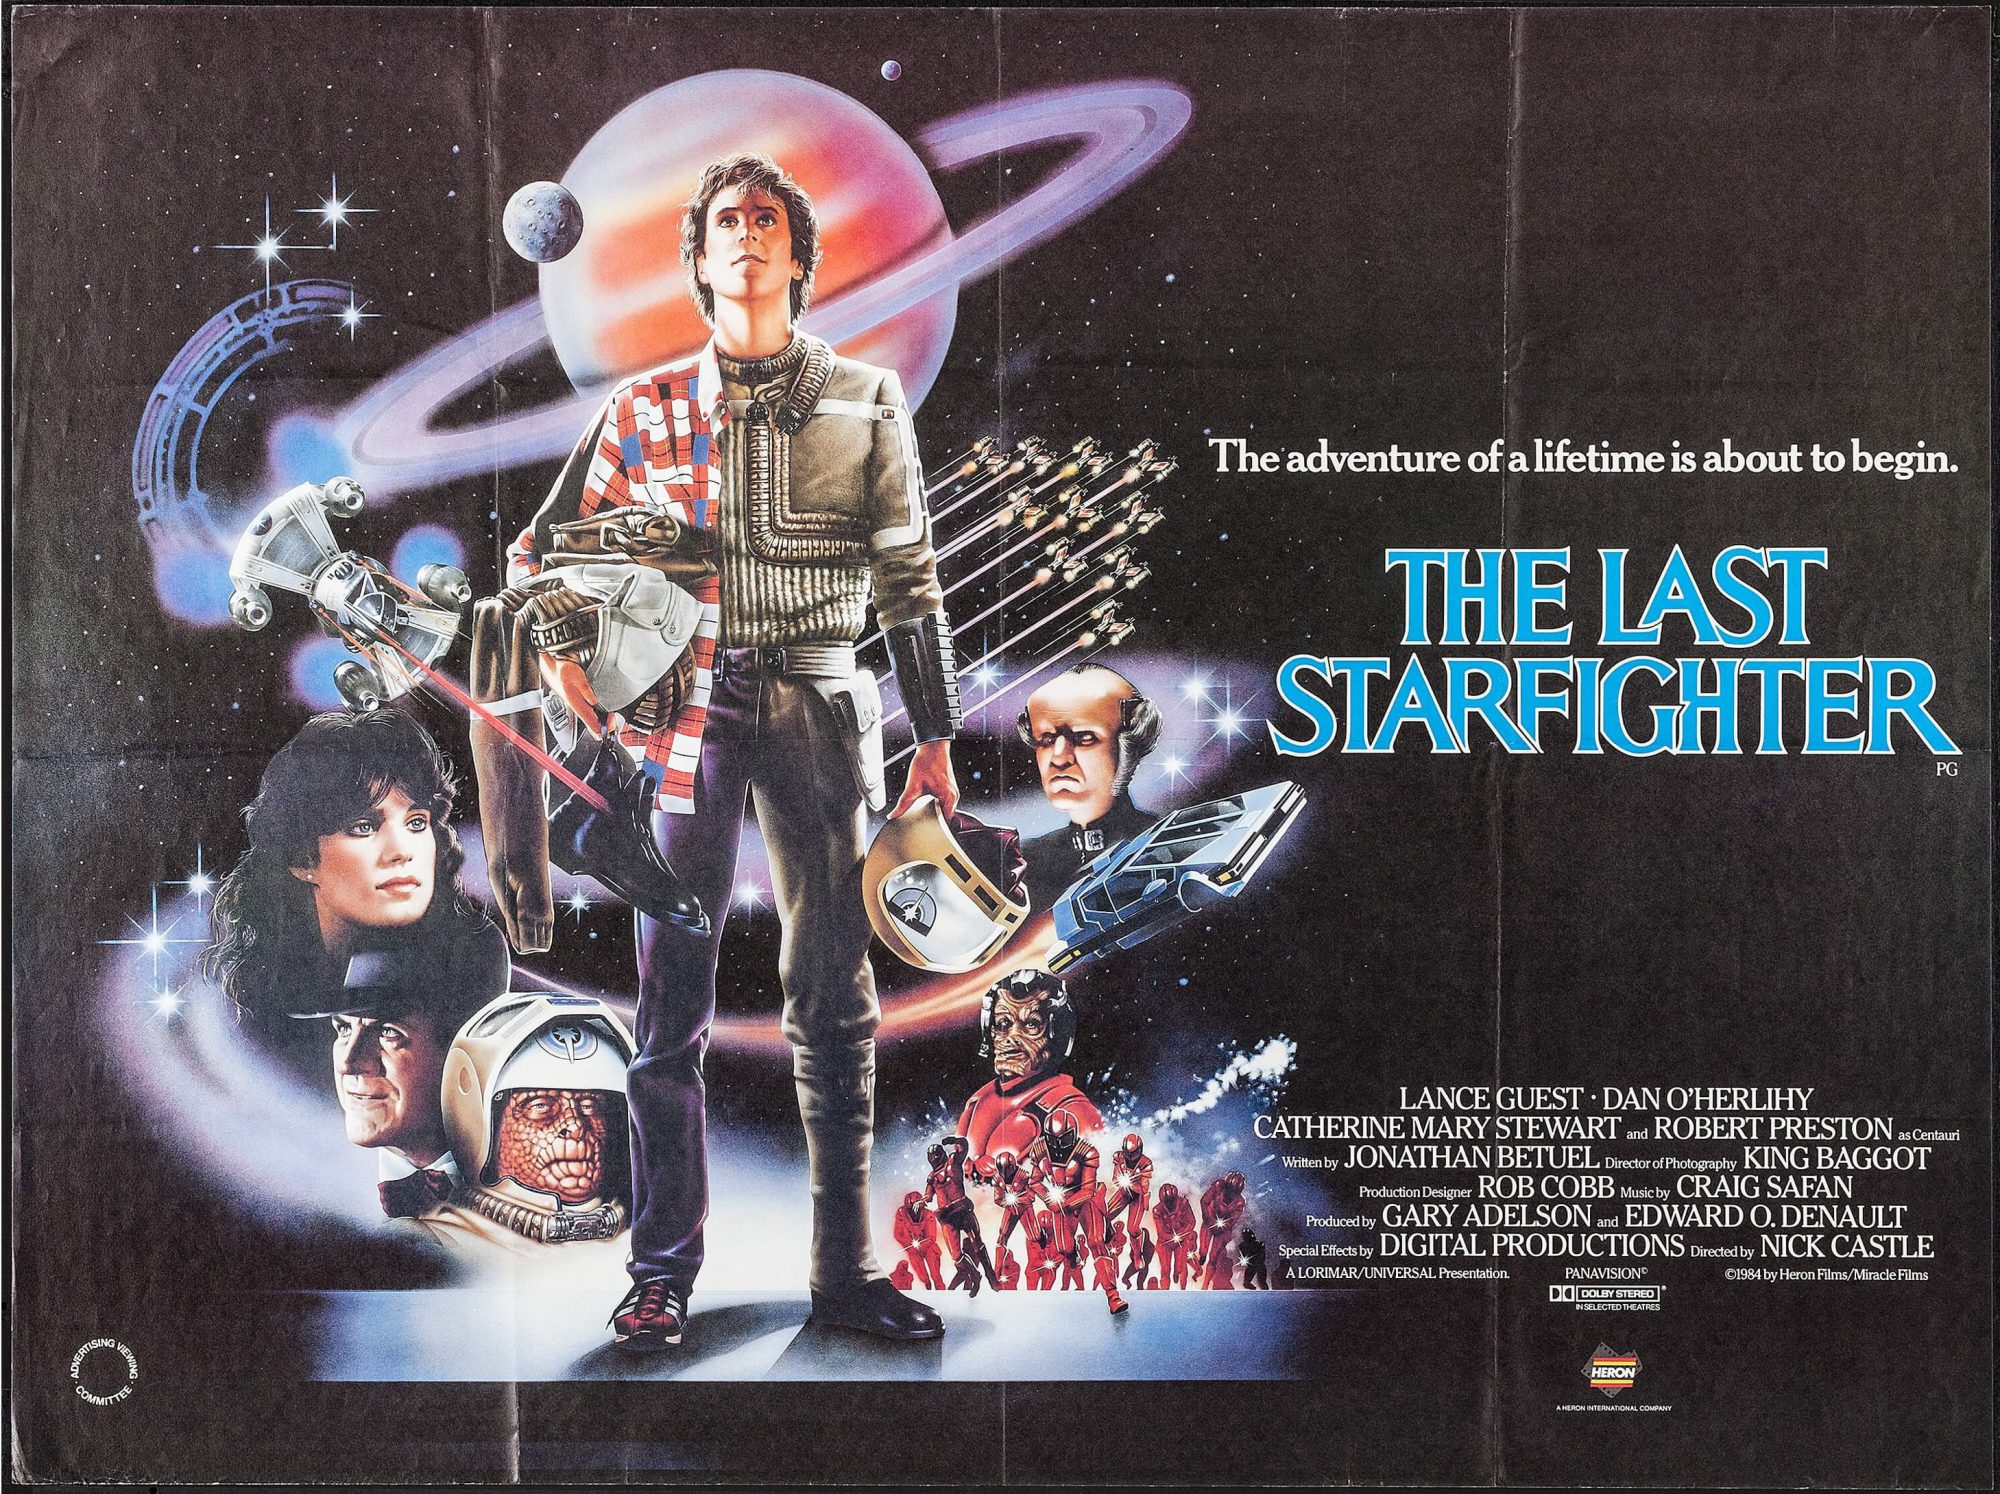 The Last Starfighter (1984) movie poster